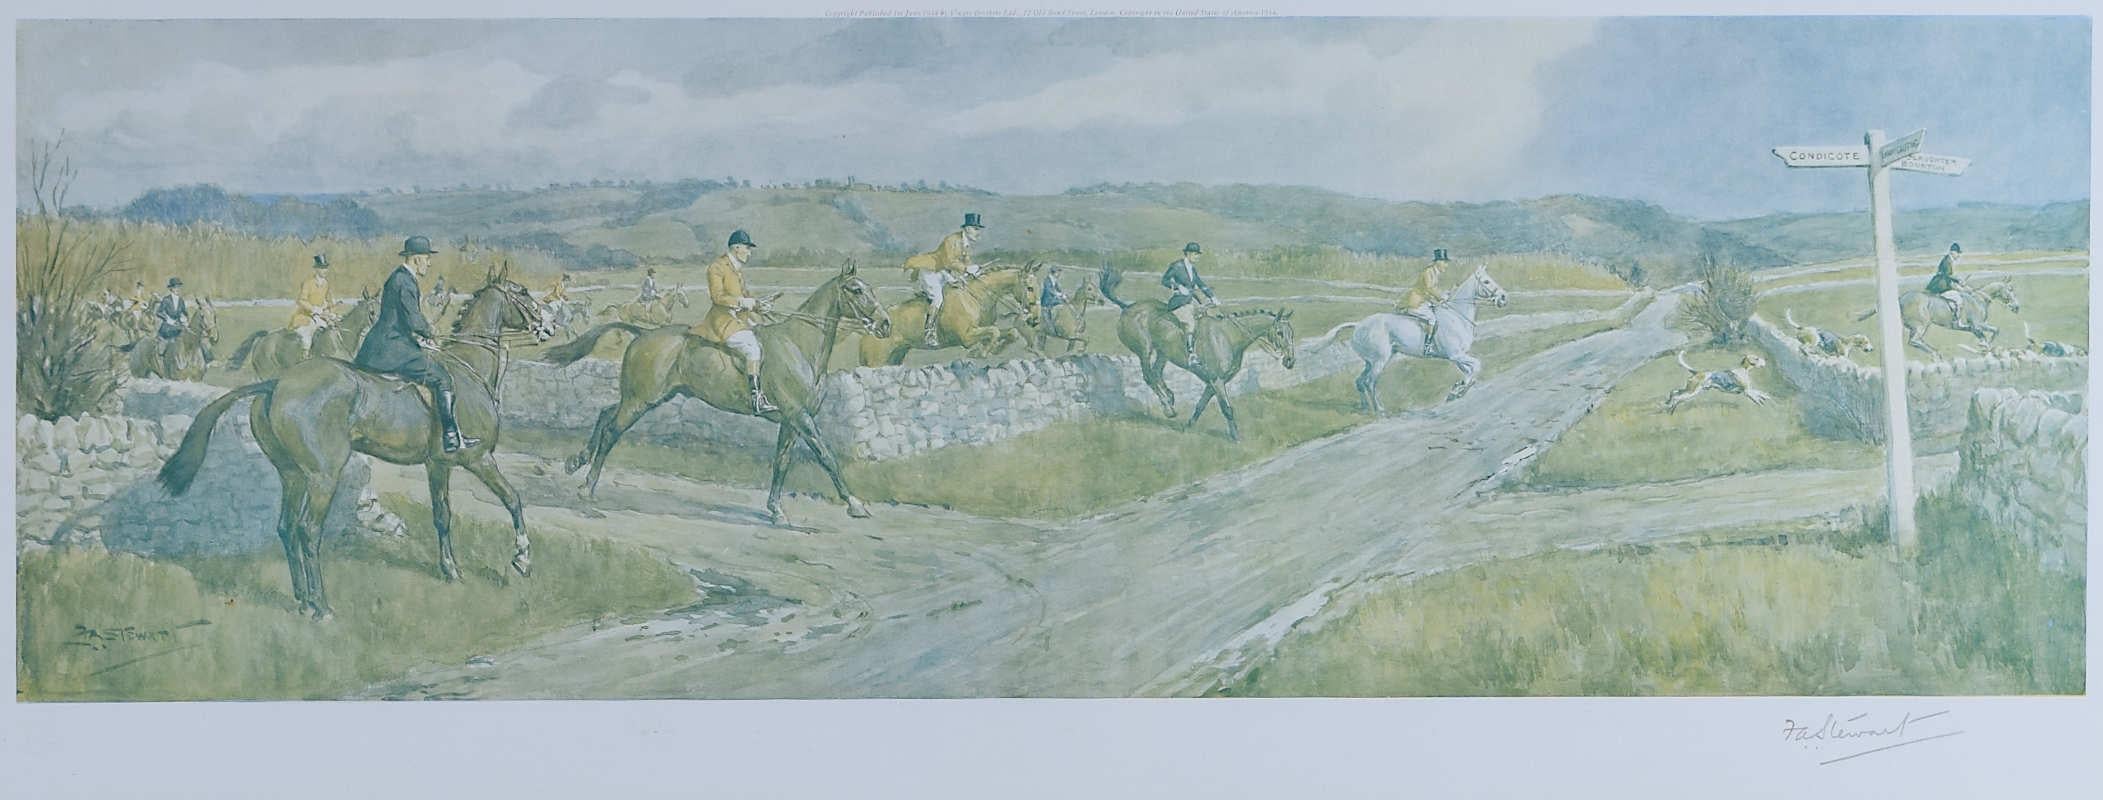 Landscape Print Frank Algernon Stewart - F A Stewart The Heythrop Hunt at Stow on the Wold - Impression de chasse au Heythrop